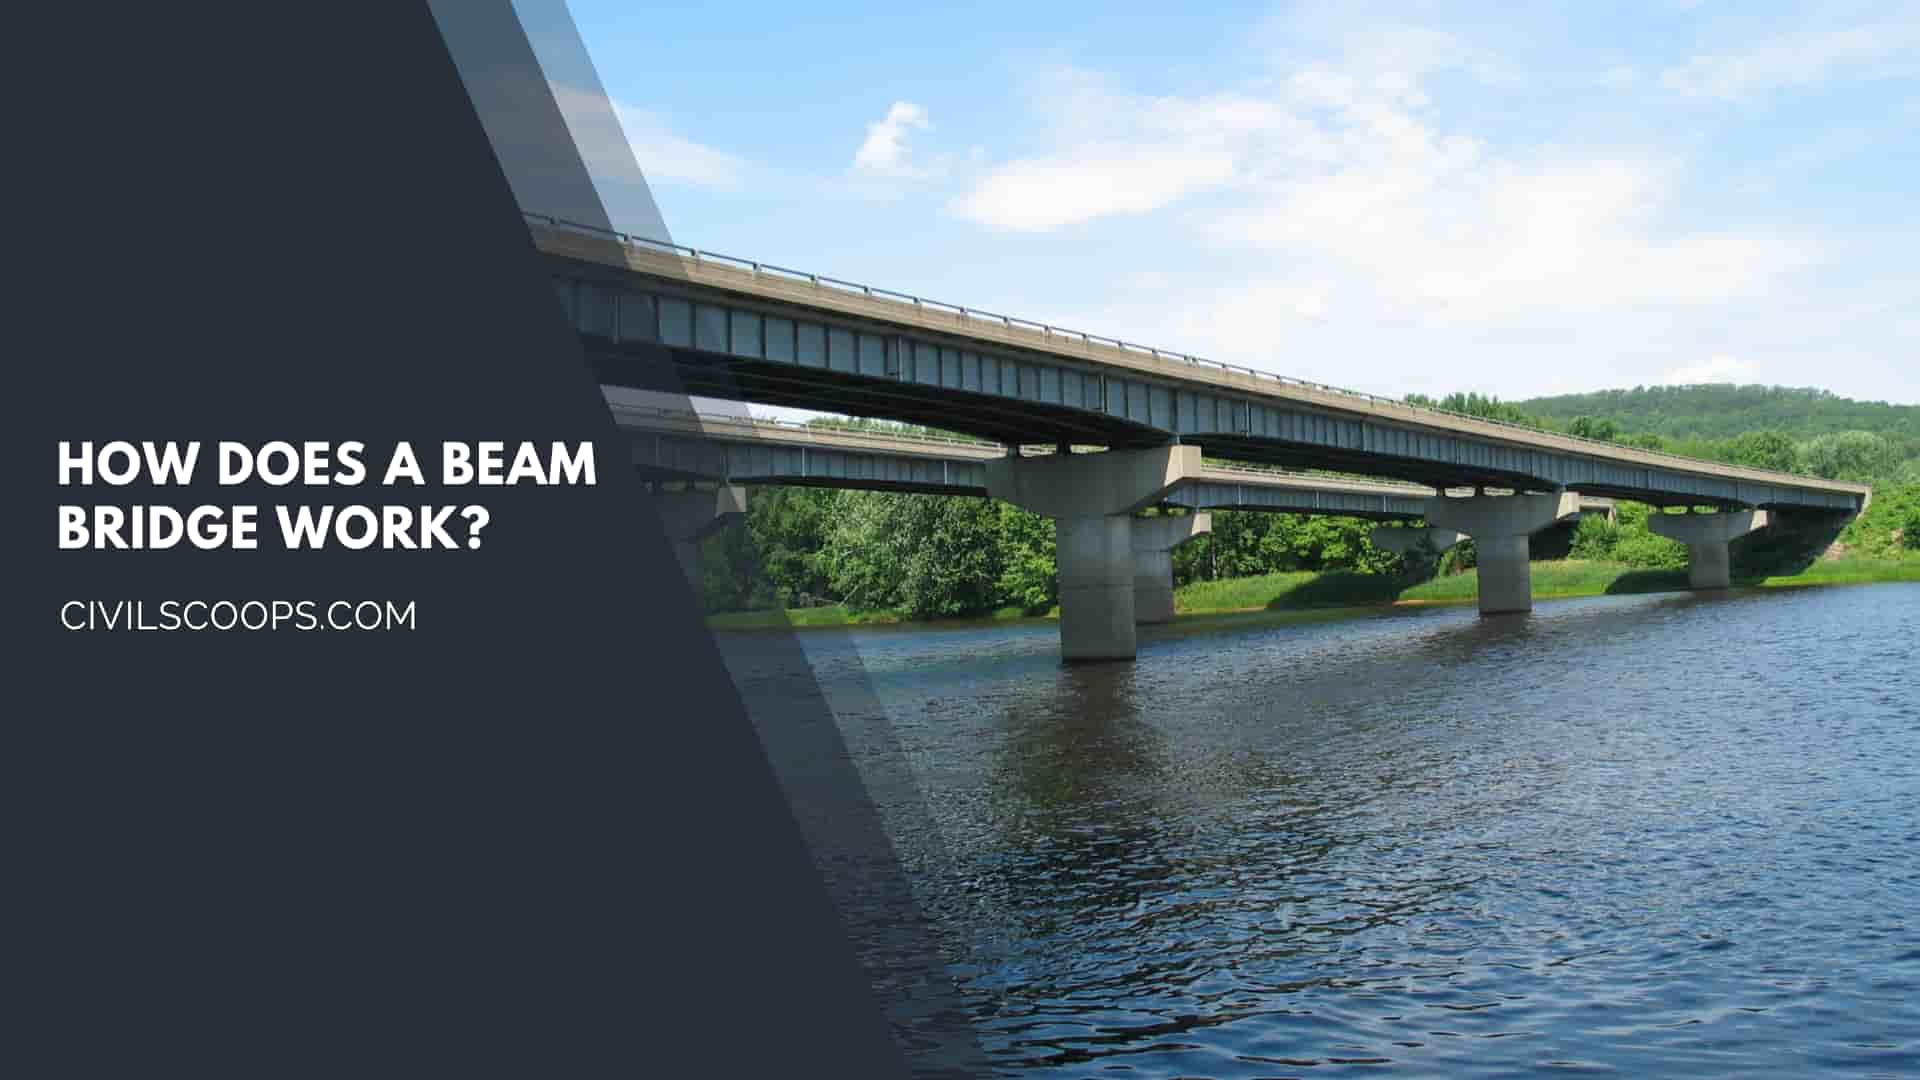 How Does a Beam Bridge Work?